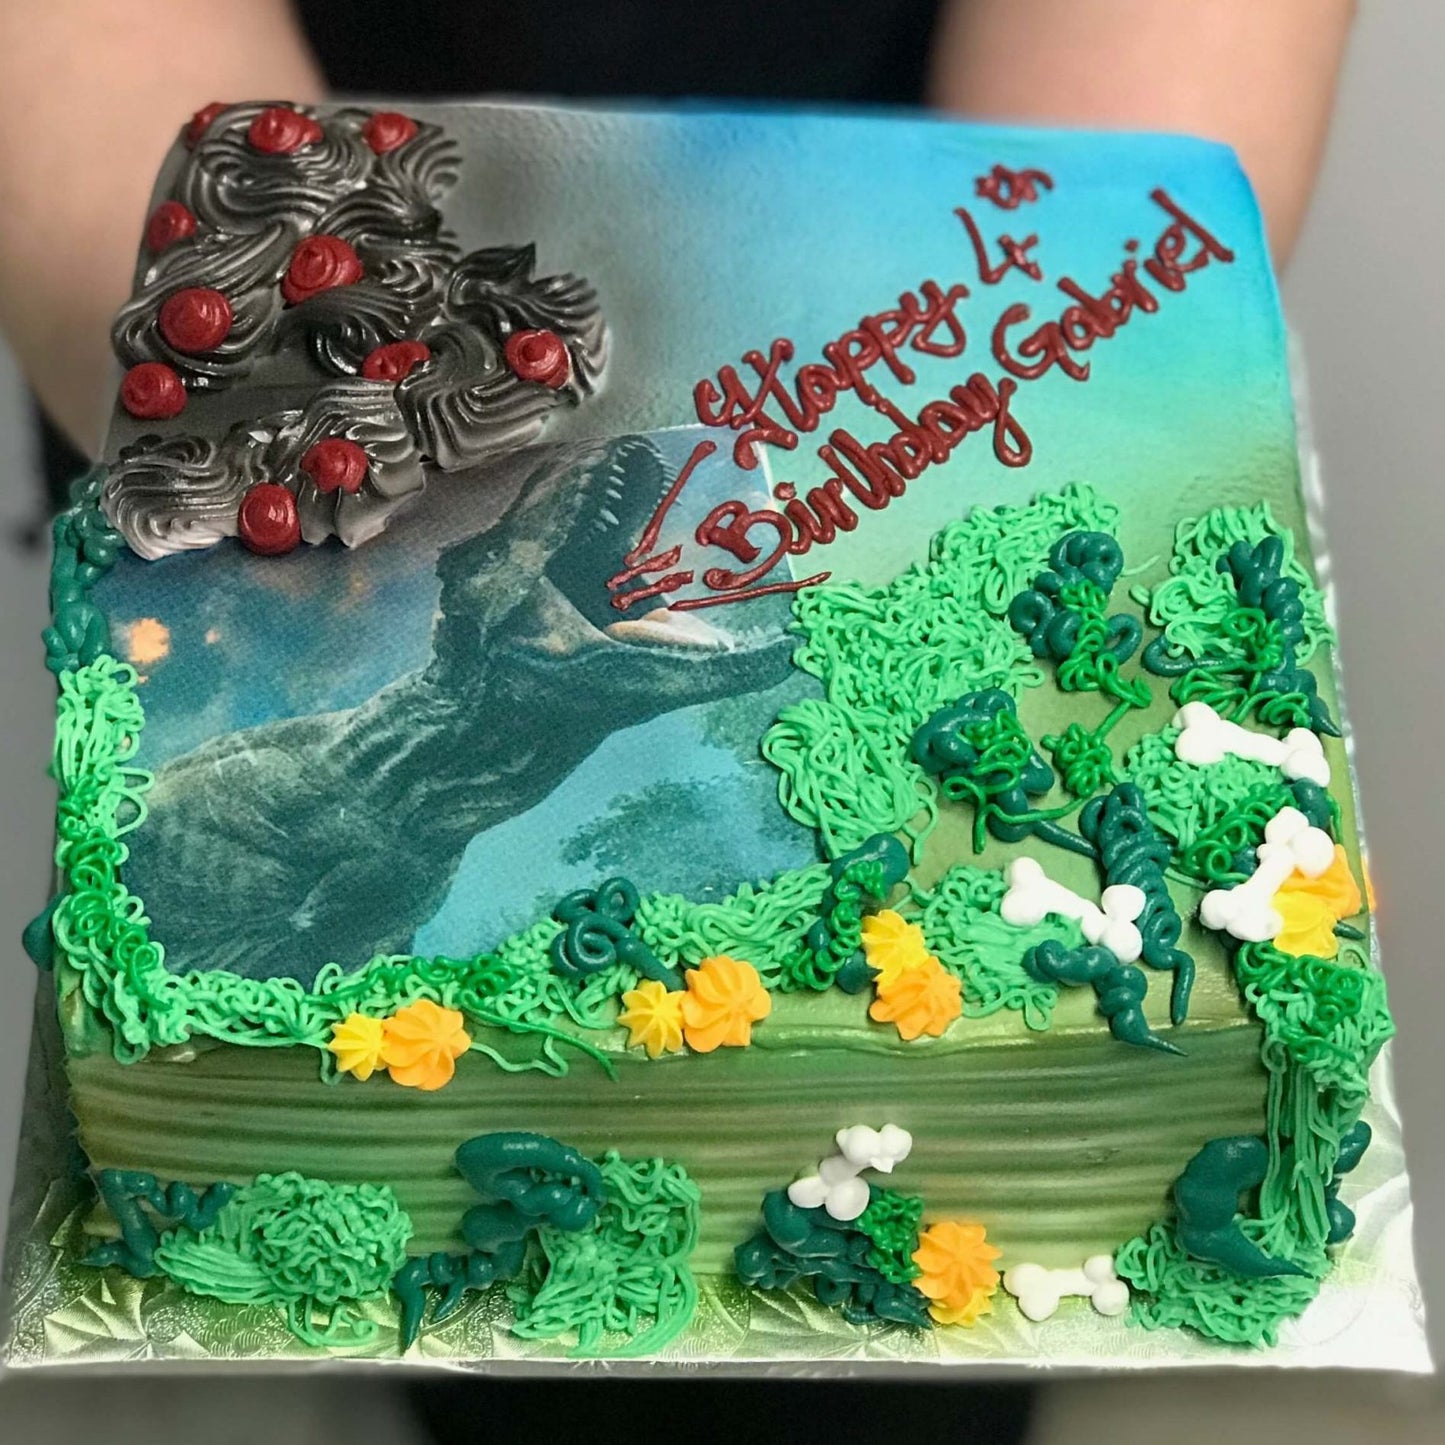 Dinosaur themed birthday cake with T Rex